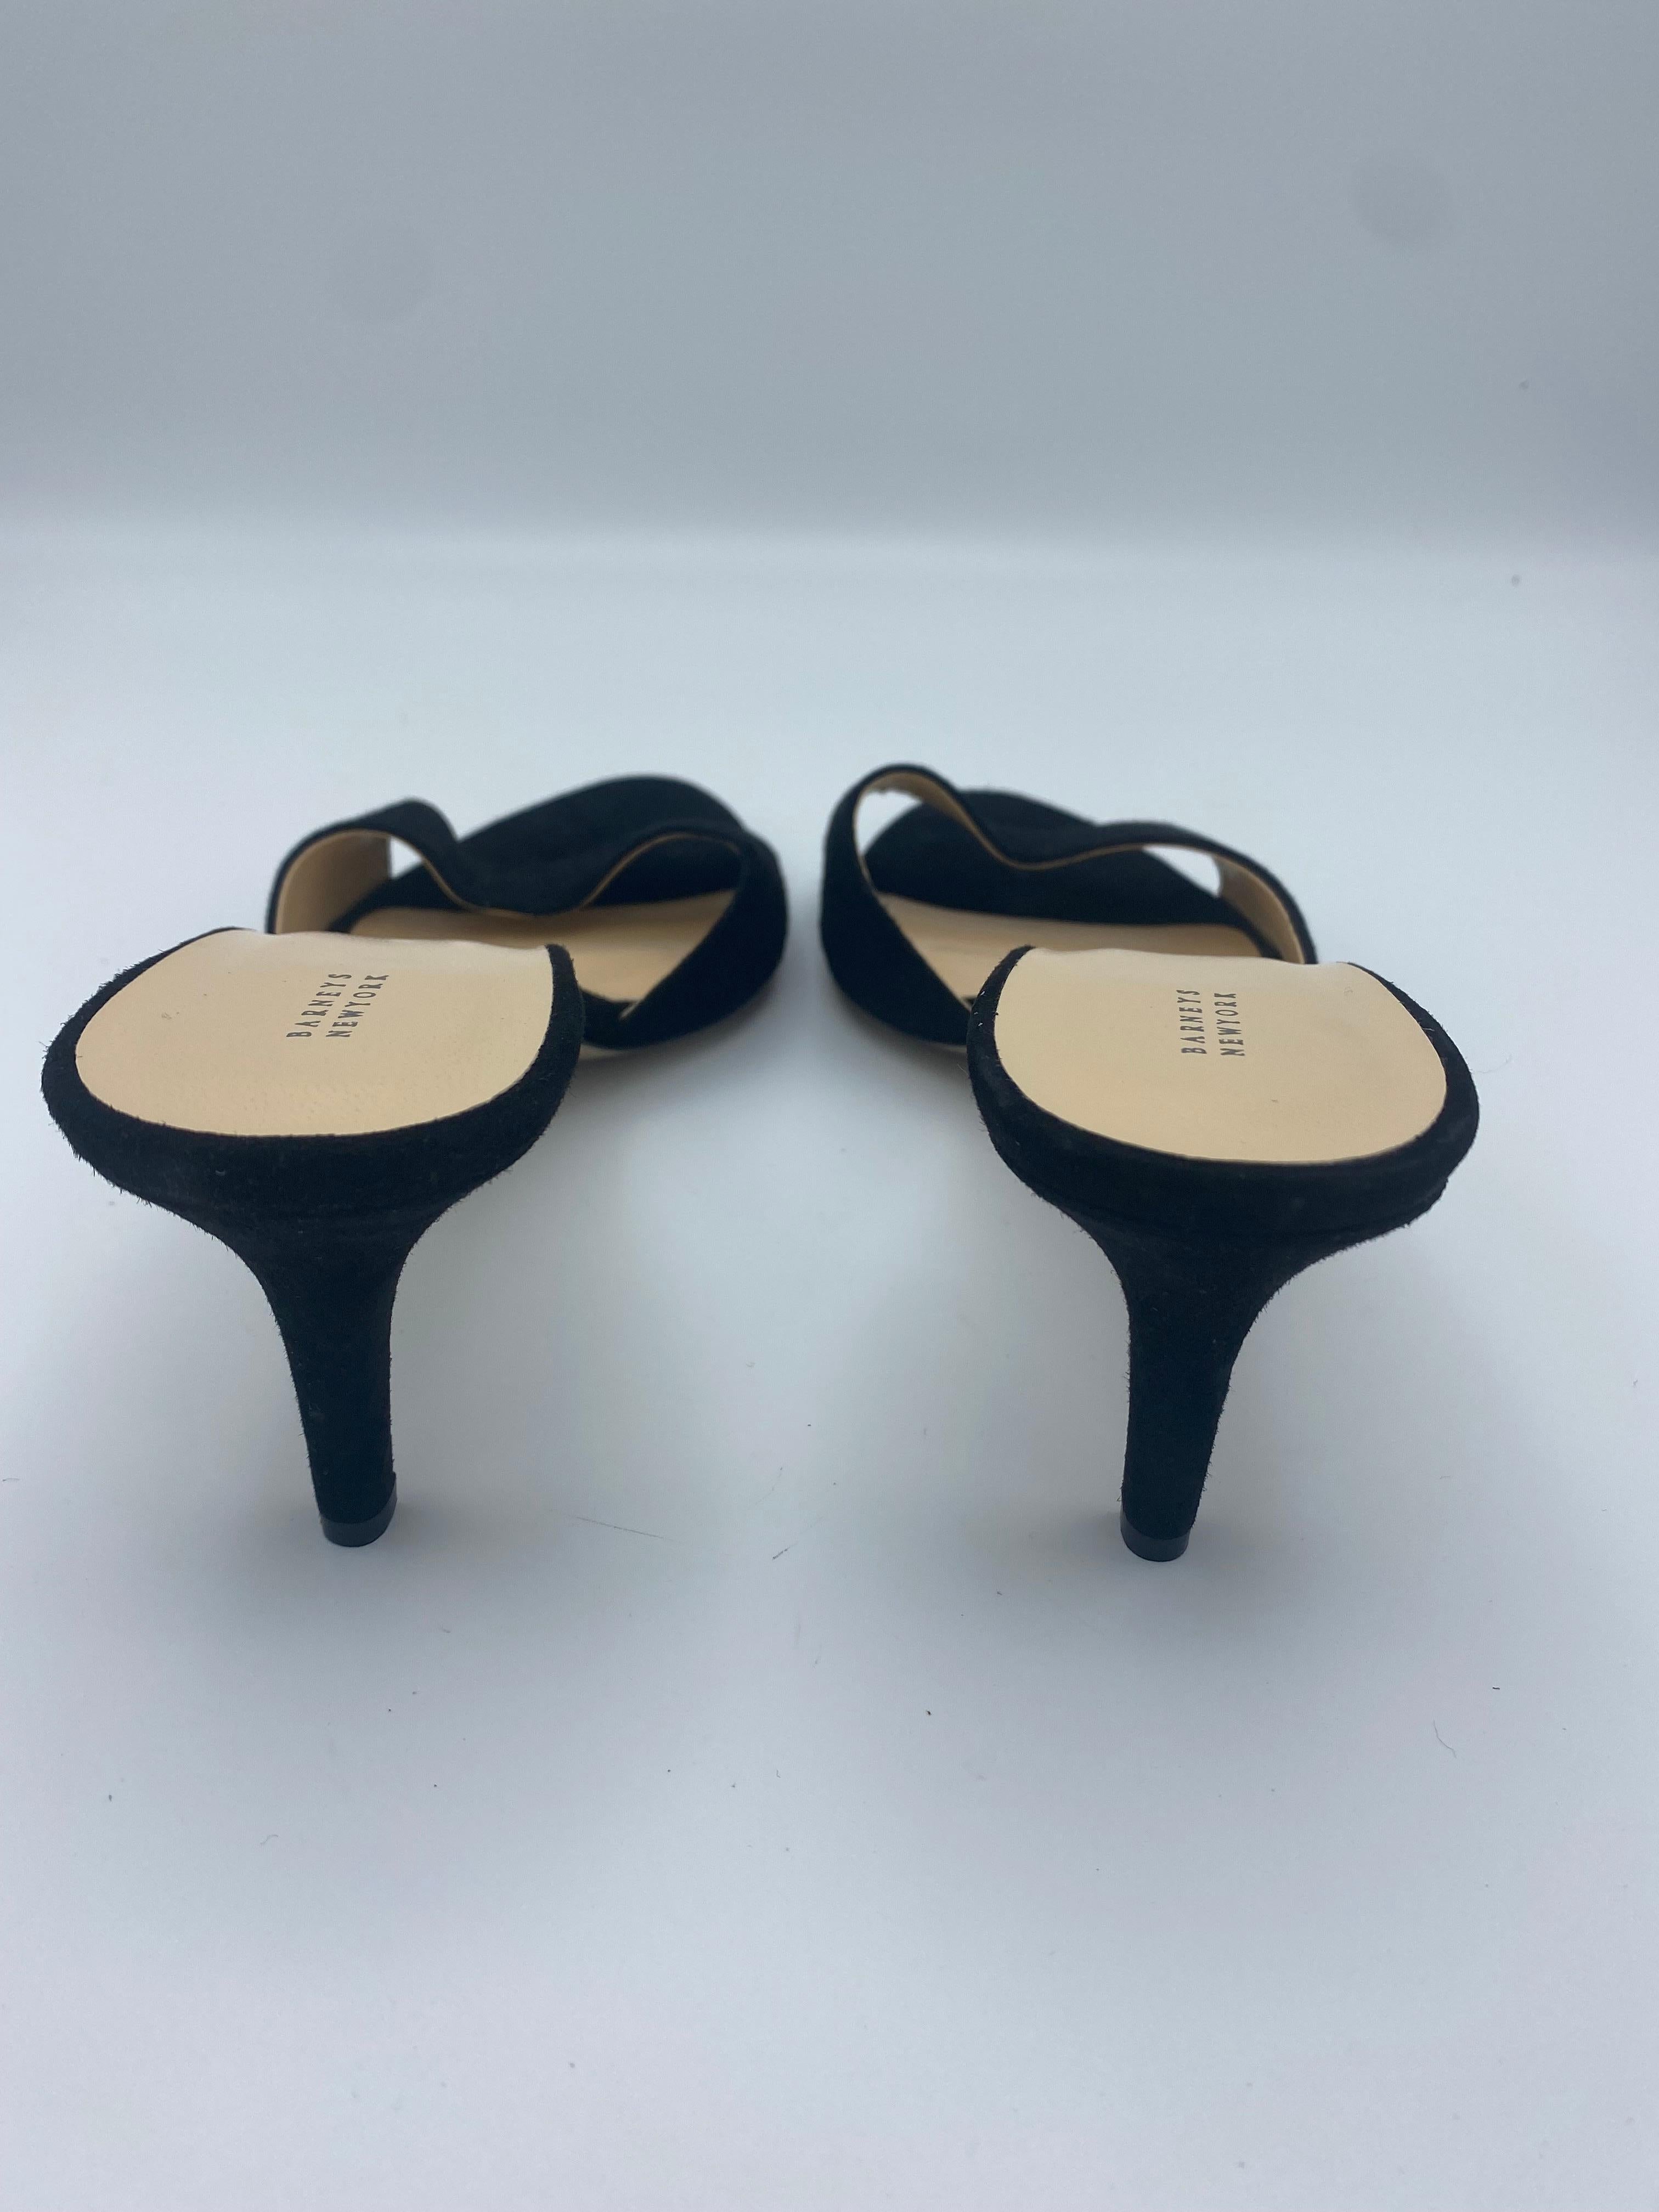 Women's Barneys New York Black Suede Mules Heels, Size 41.5